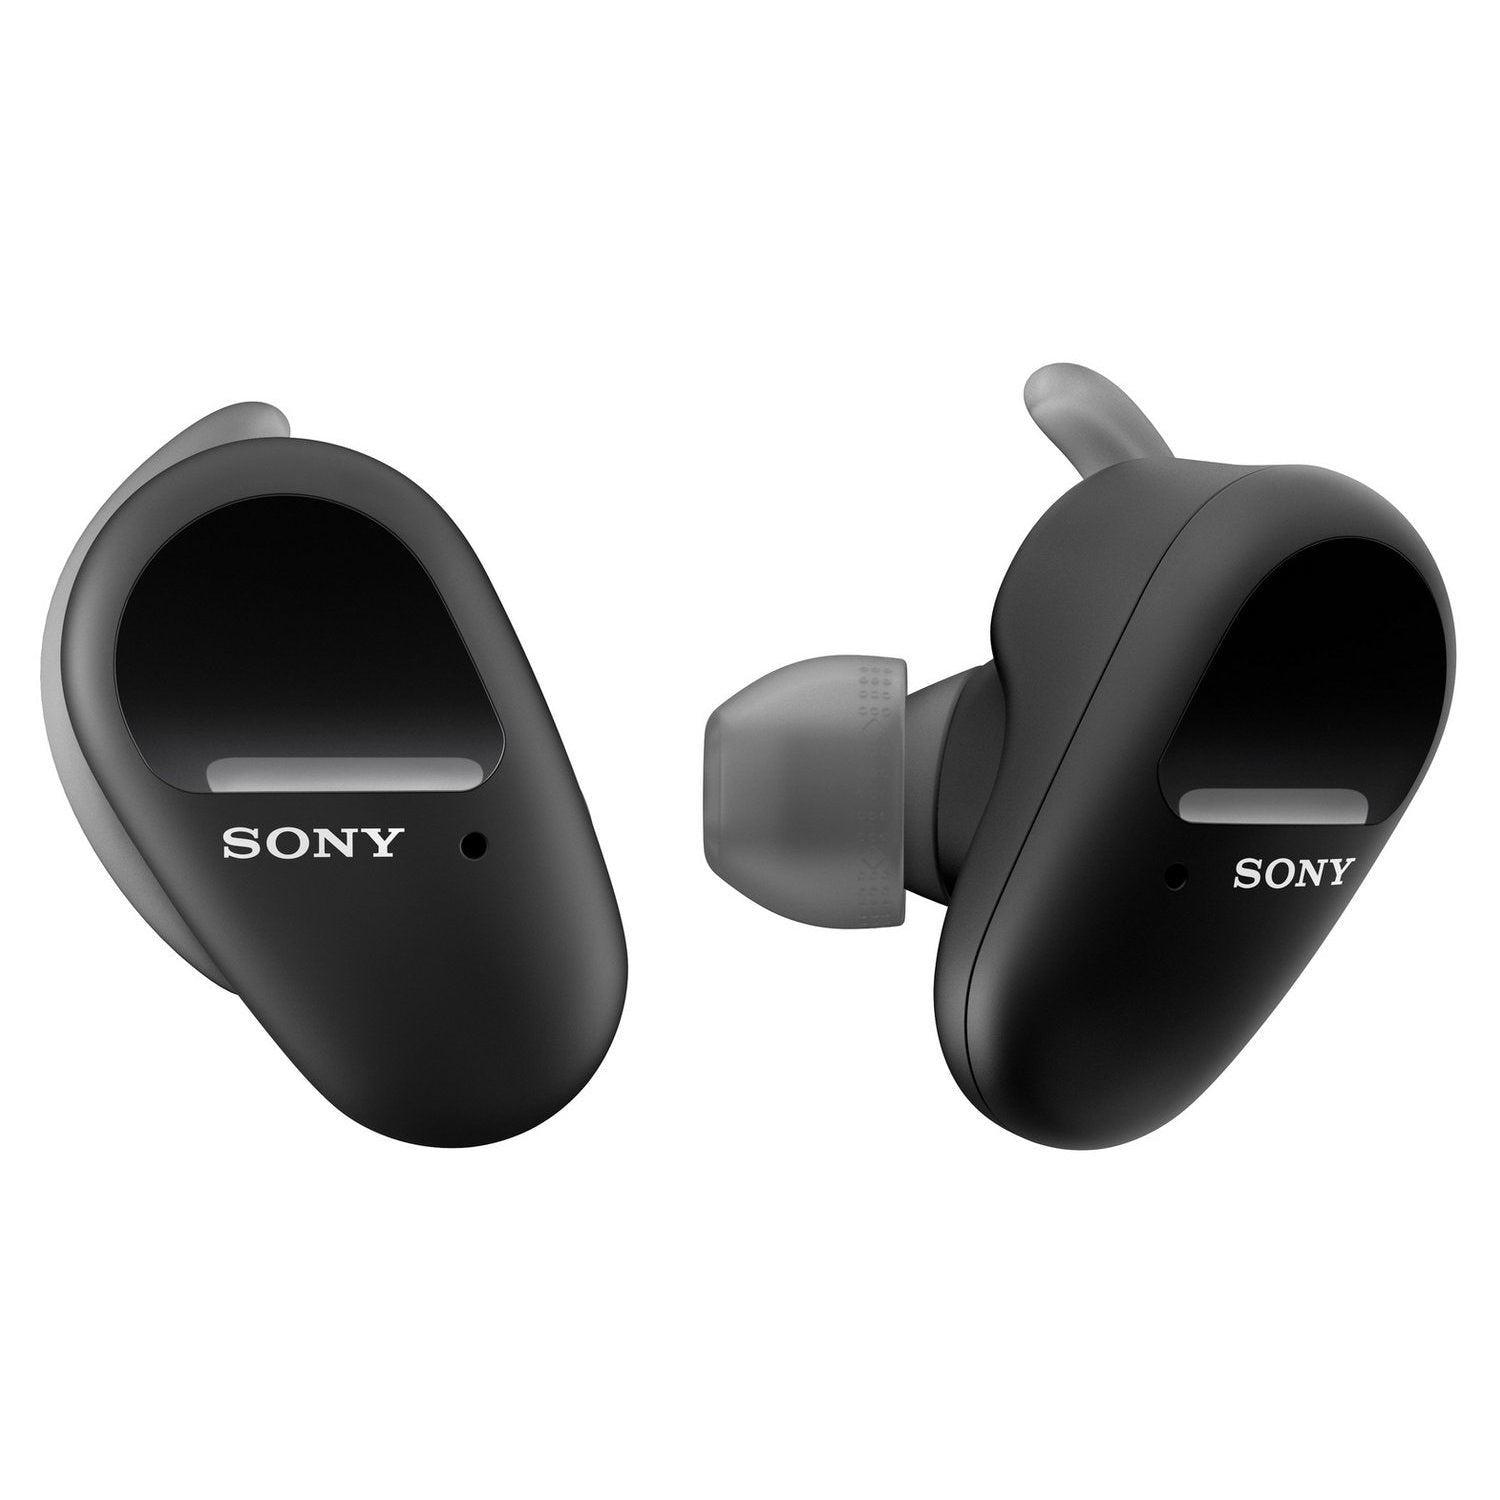 Sony WF-SP800N In-Ear True Wireless Earbuds - Black - Refurbished Good